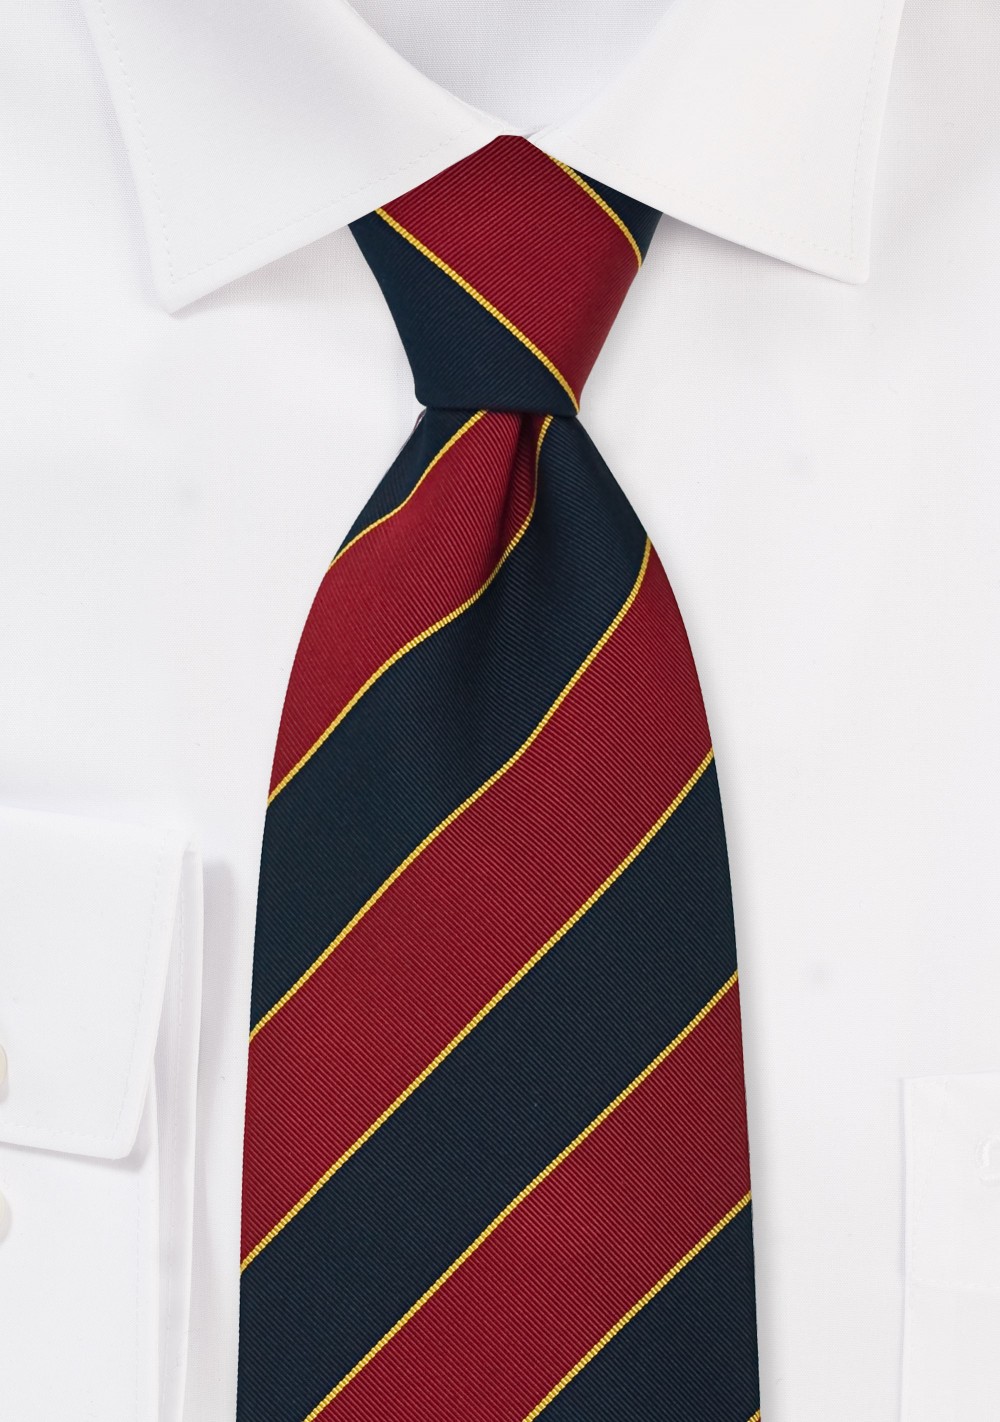 Extra Long British Neck Ties -  Regimental Tie "Oxford" by Parsley